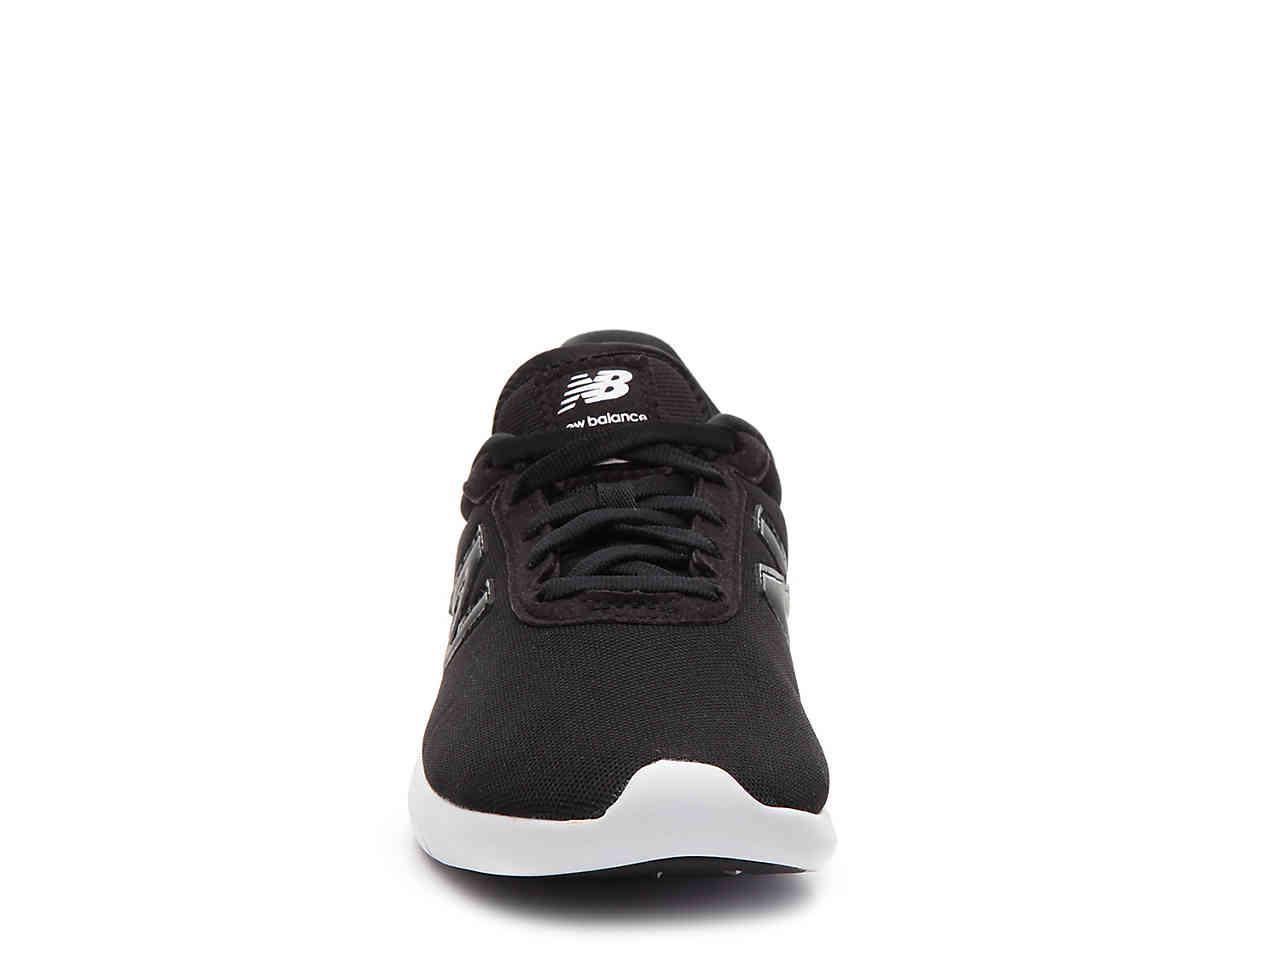 New Balance 514 Lightweight Training Shoe in Black - Lyst